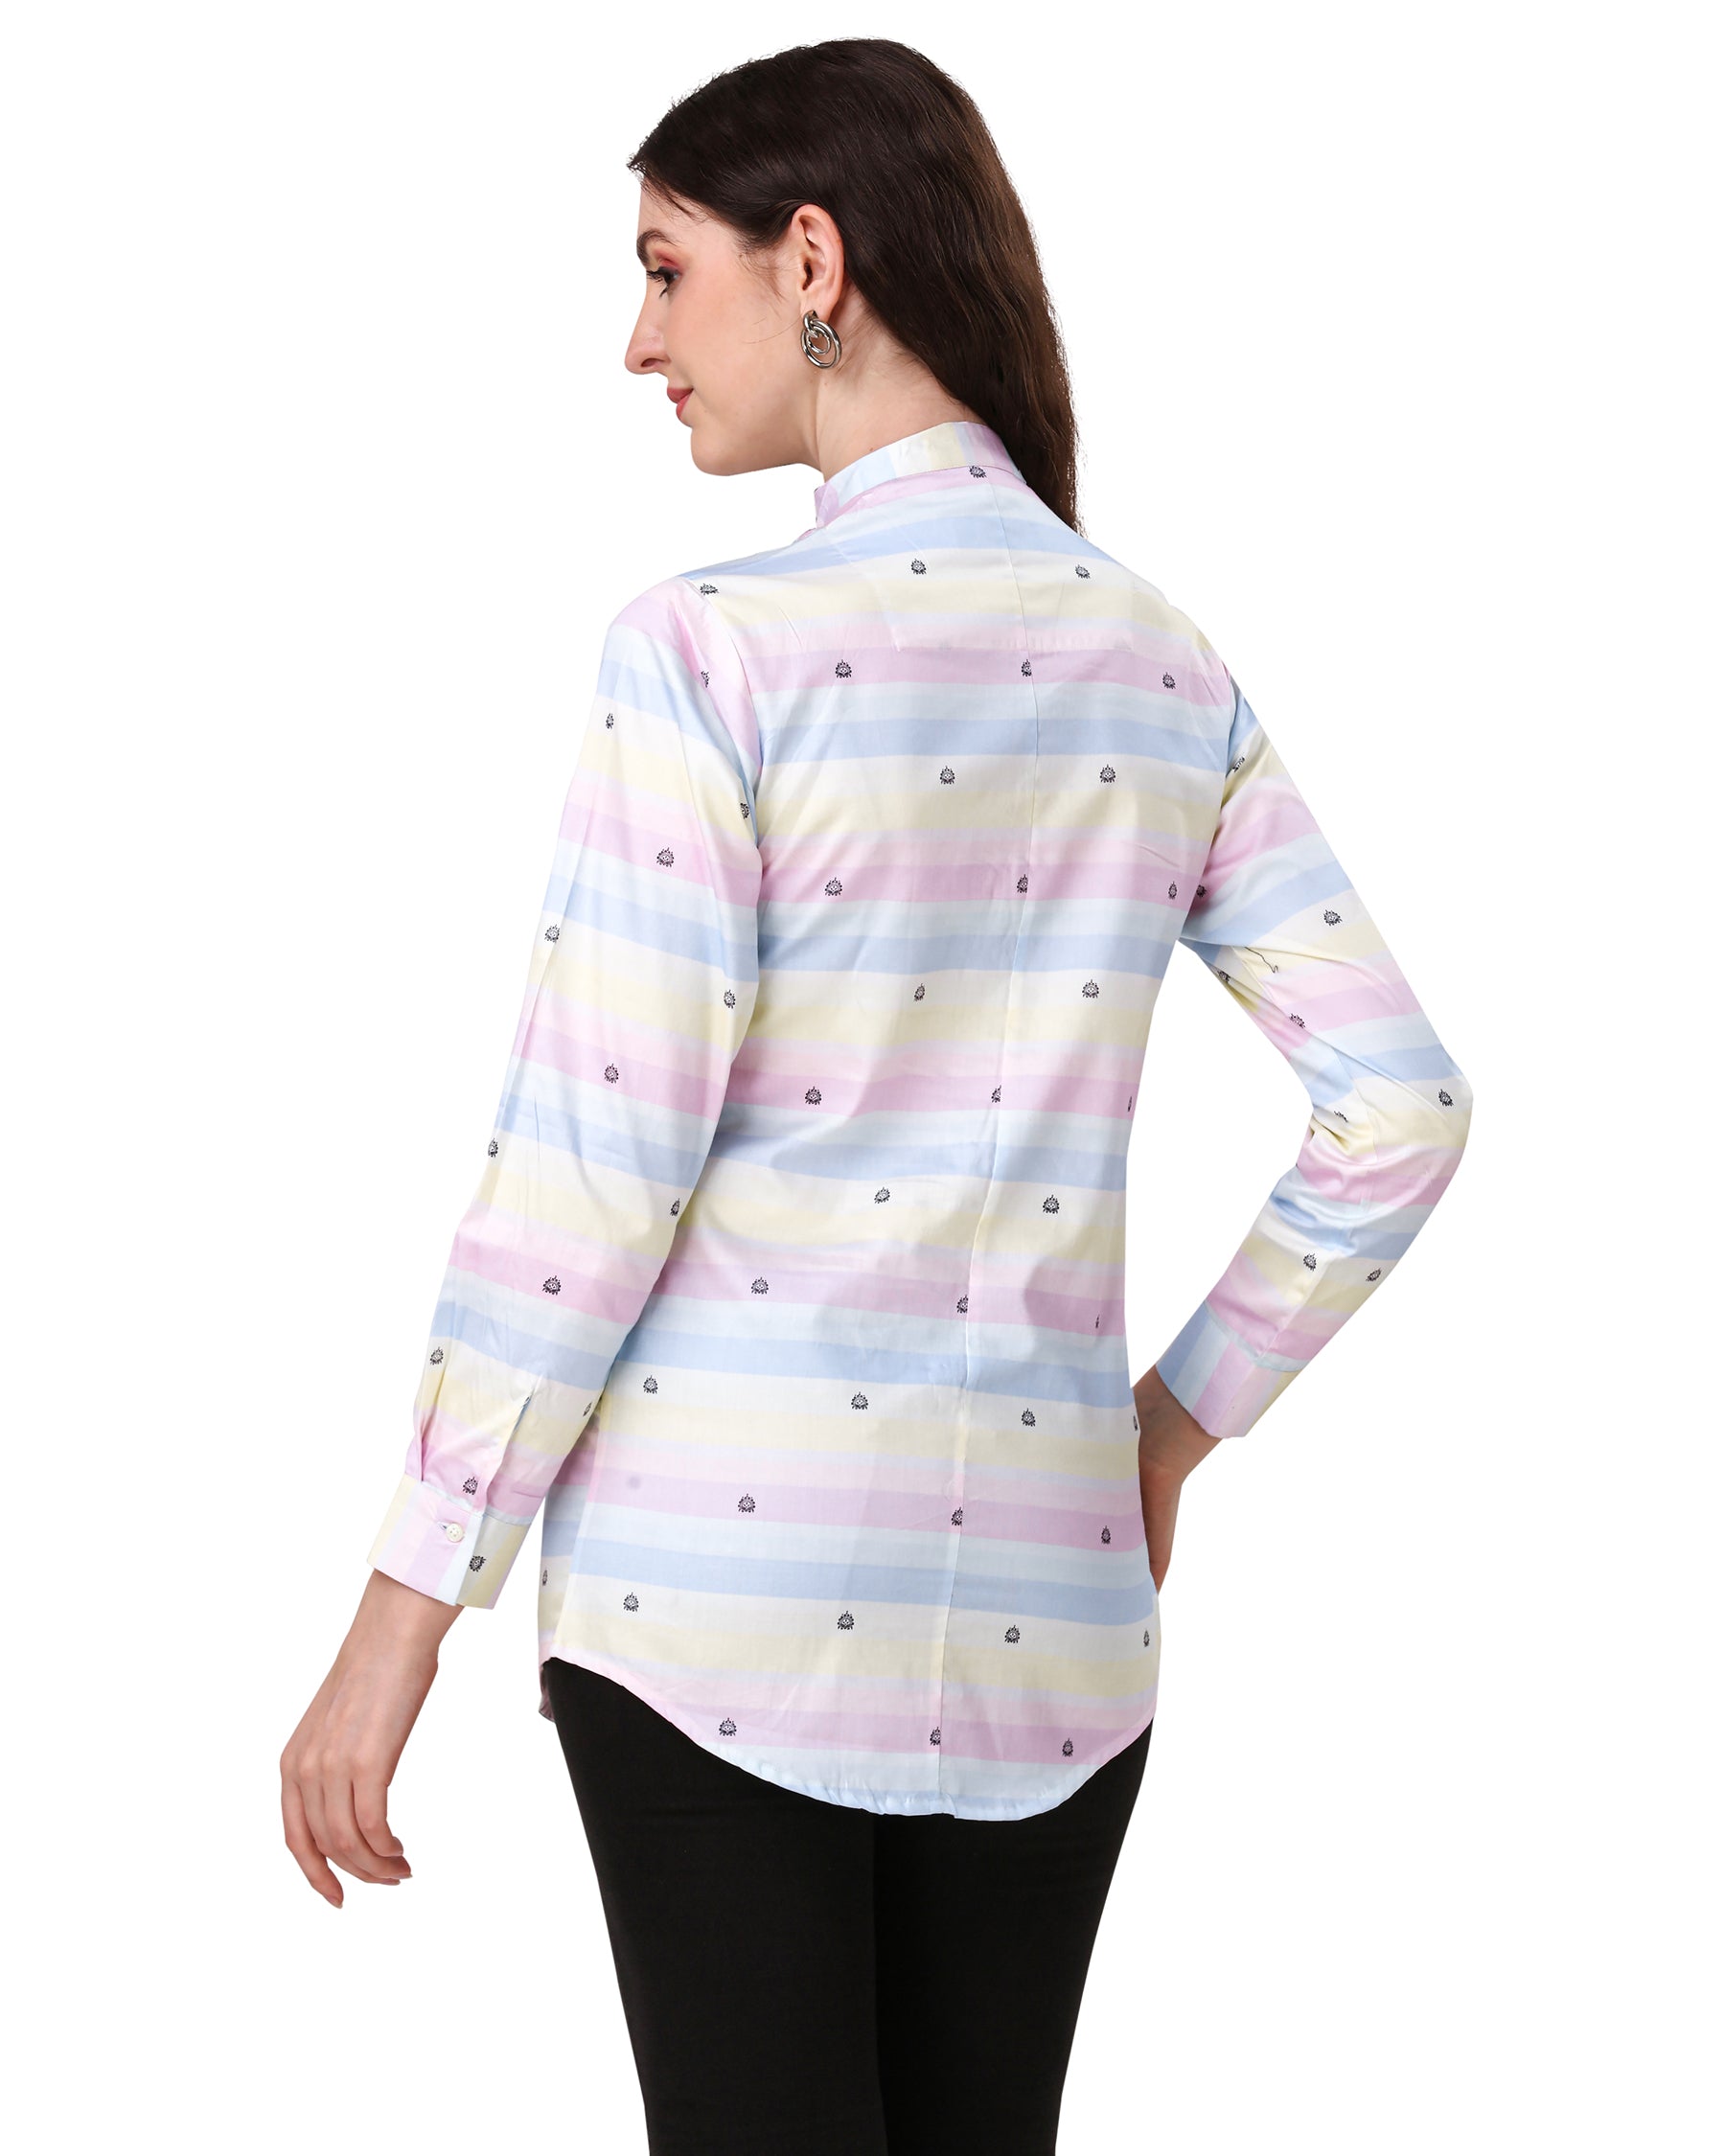 Cherub Pink and Multicolour Printed Super Soft Premium Cotton Women’s Shirt